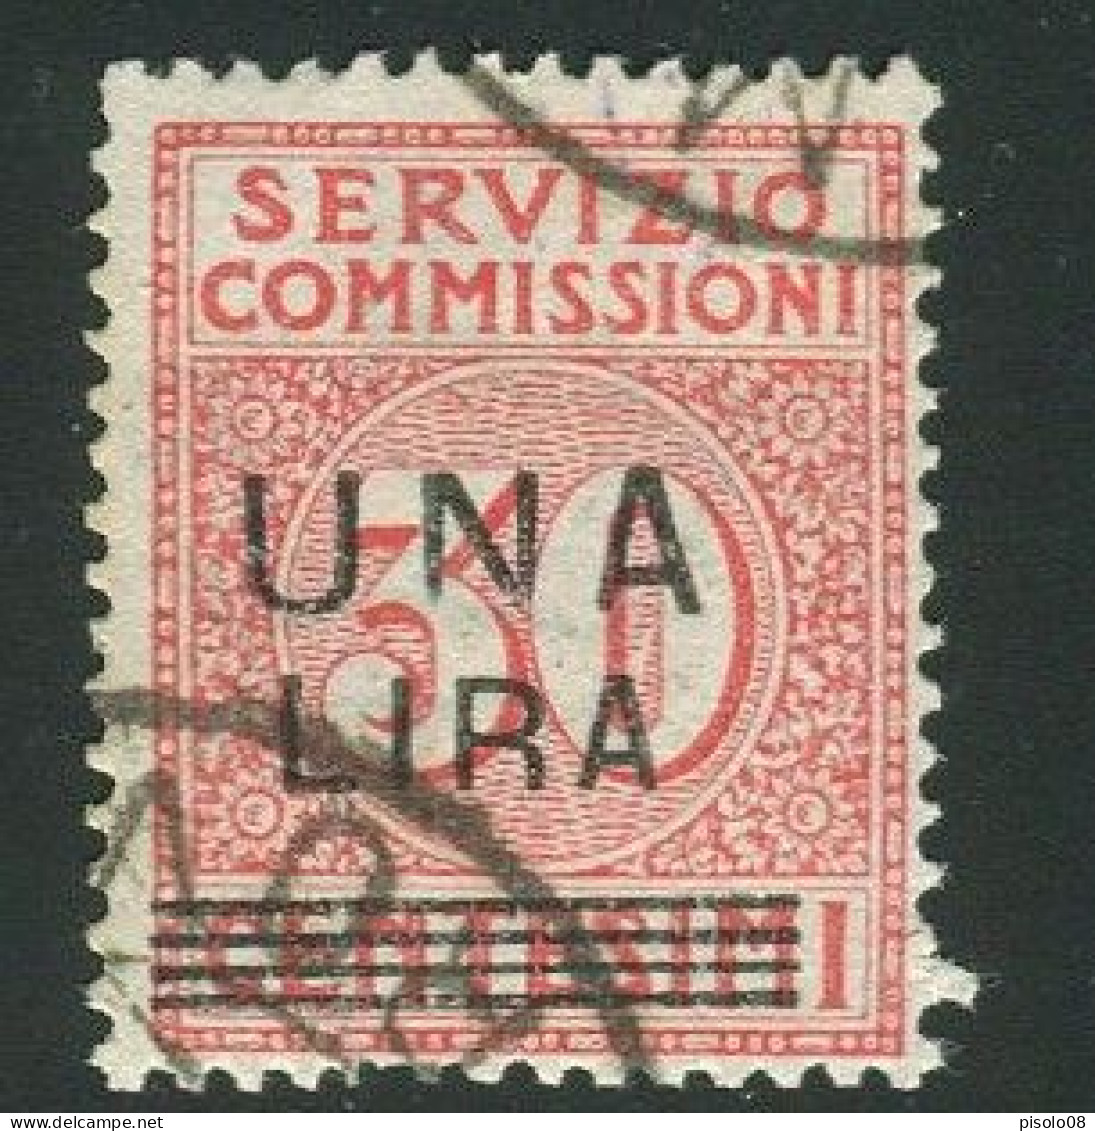 REGNO 1925 SERVIZIO COMMISSIONI 1 L. 30 C.USATA - Segnatasse